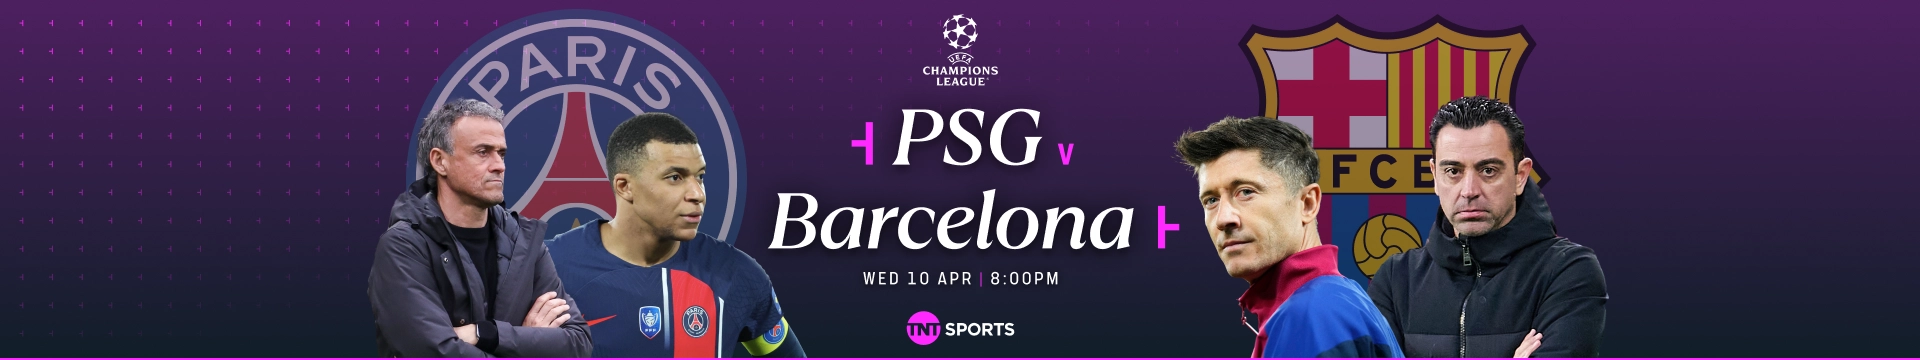 PSG v Barcelona - PSG v Barcelona Wednesday 10 April at 8pm